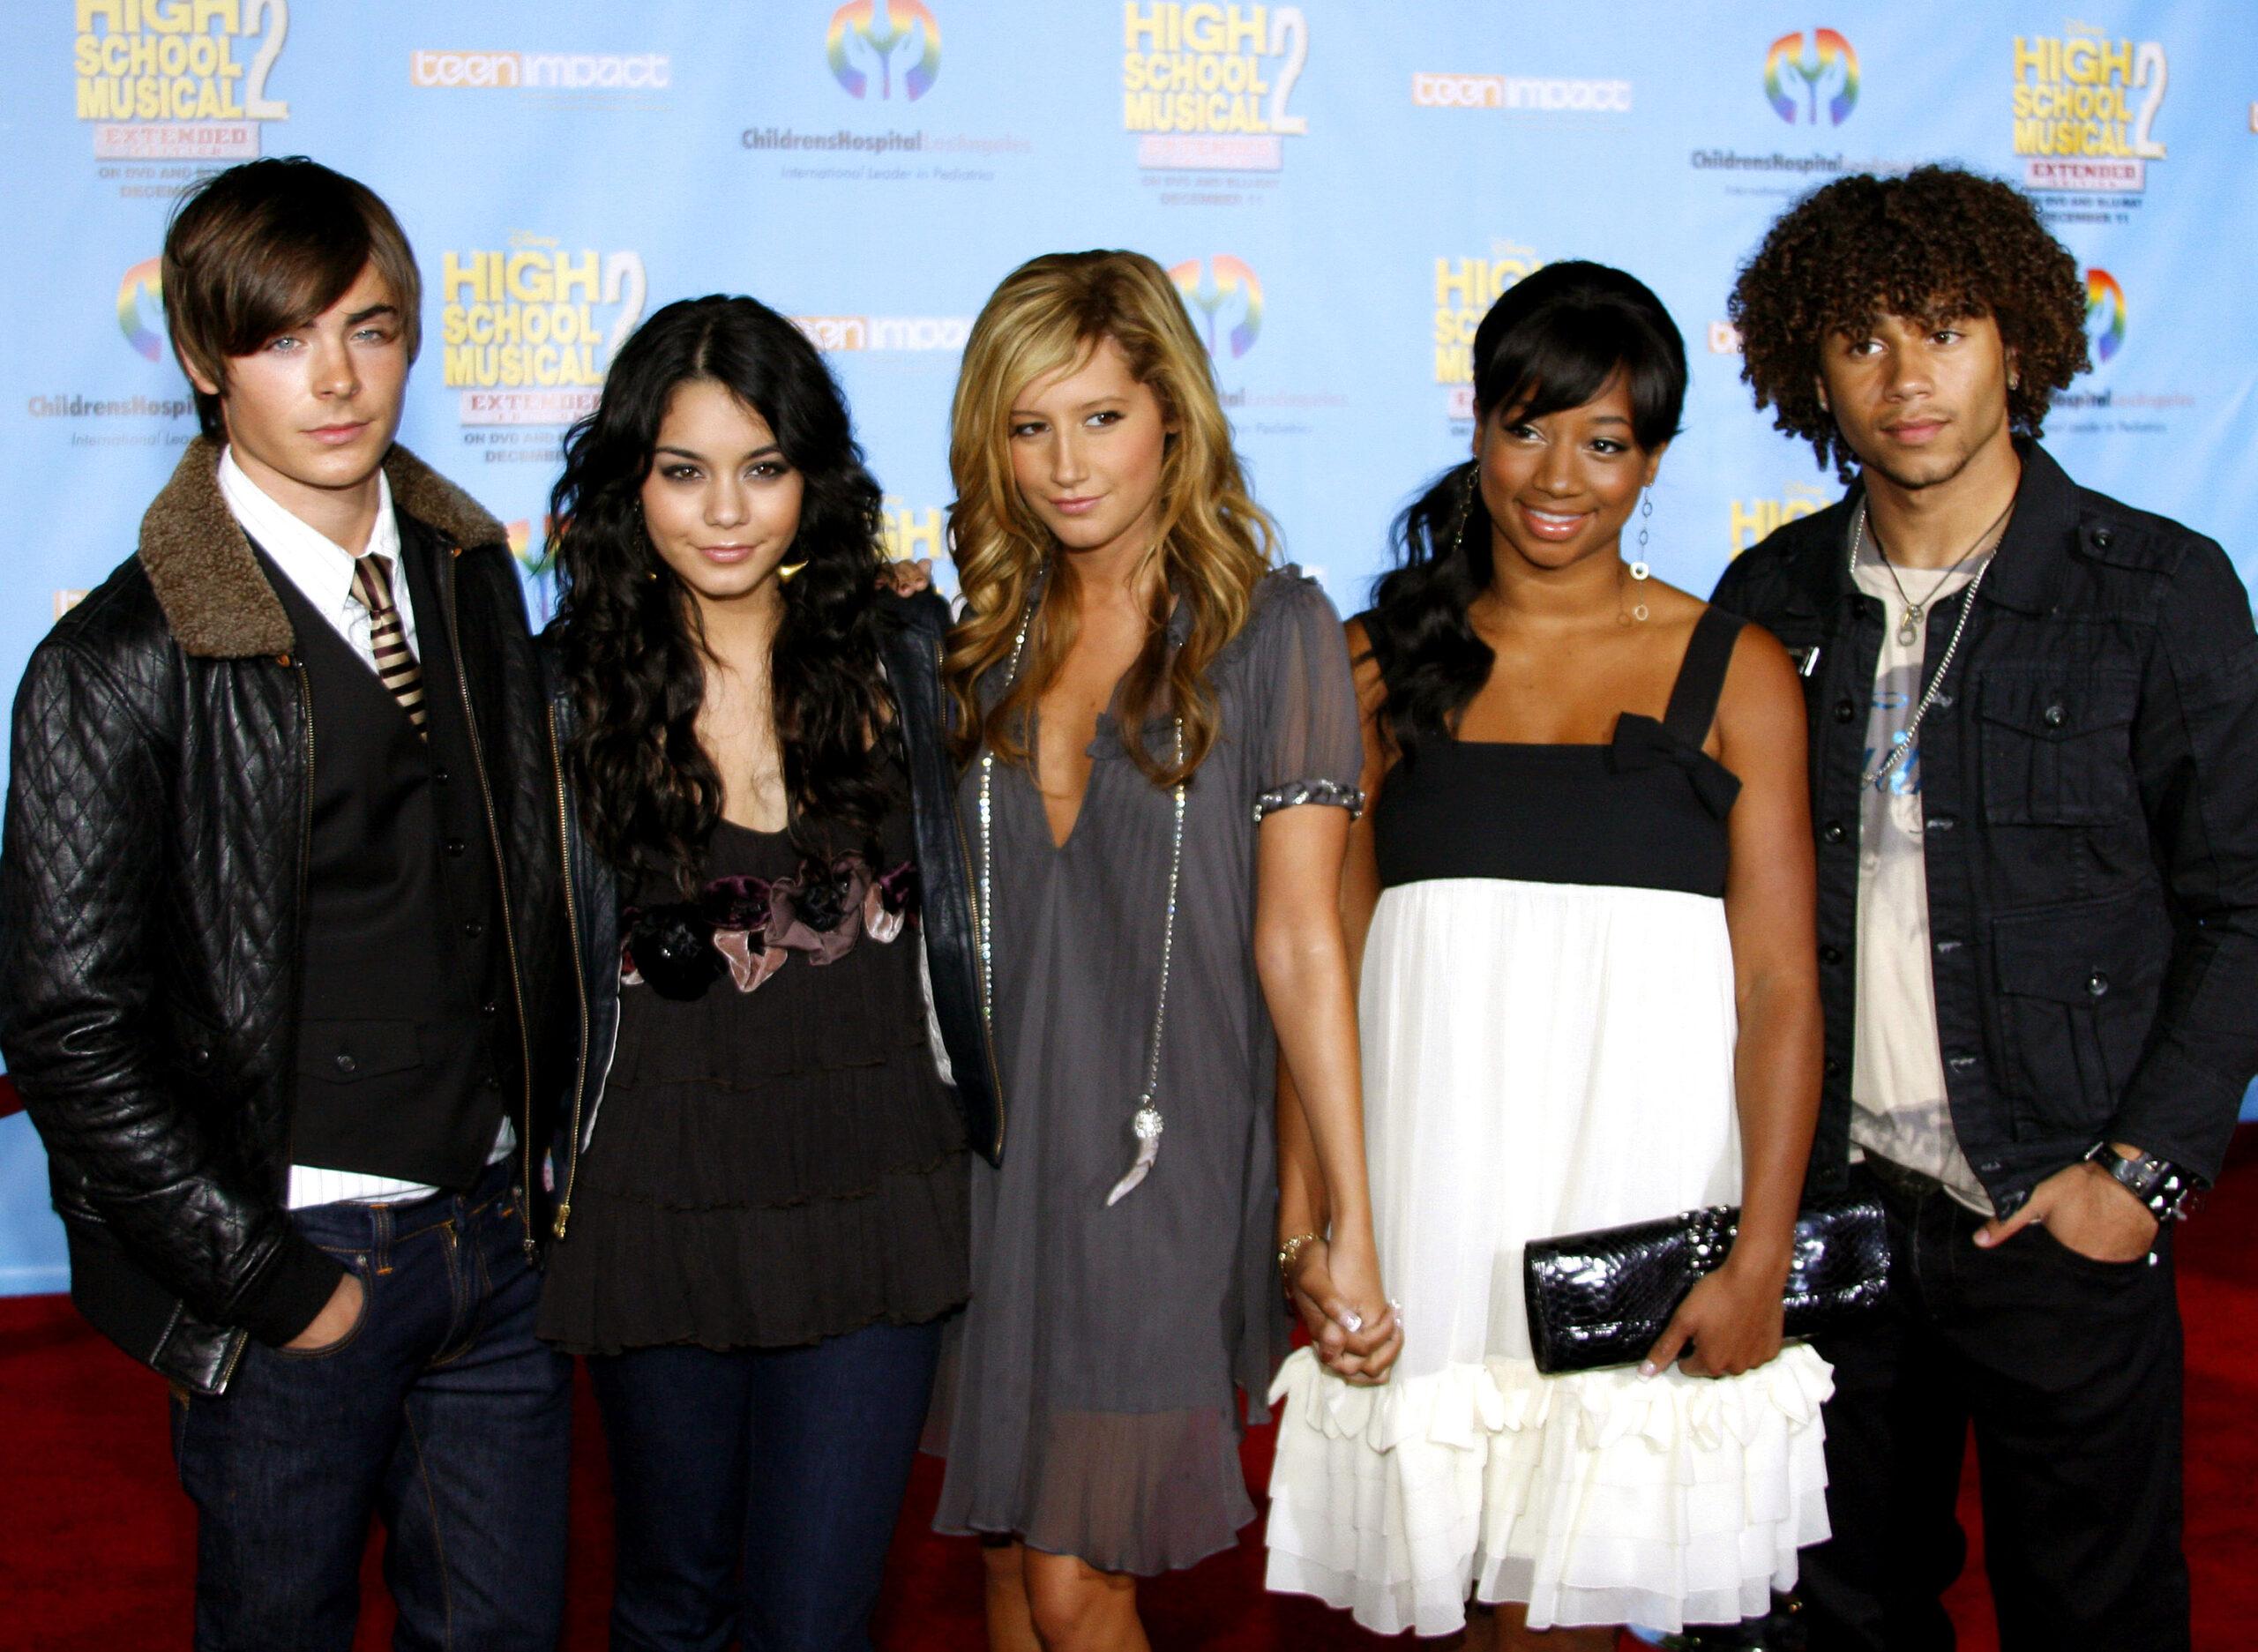 Cast of High School Musical